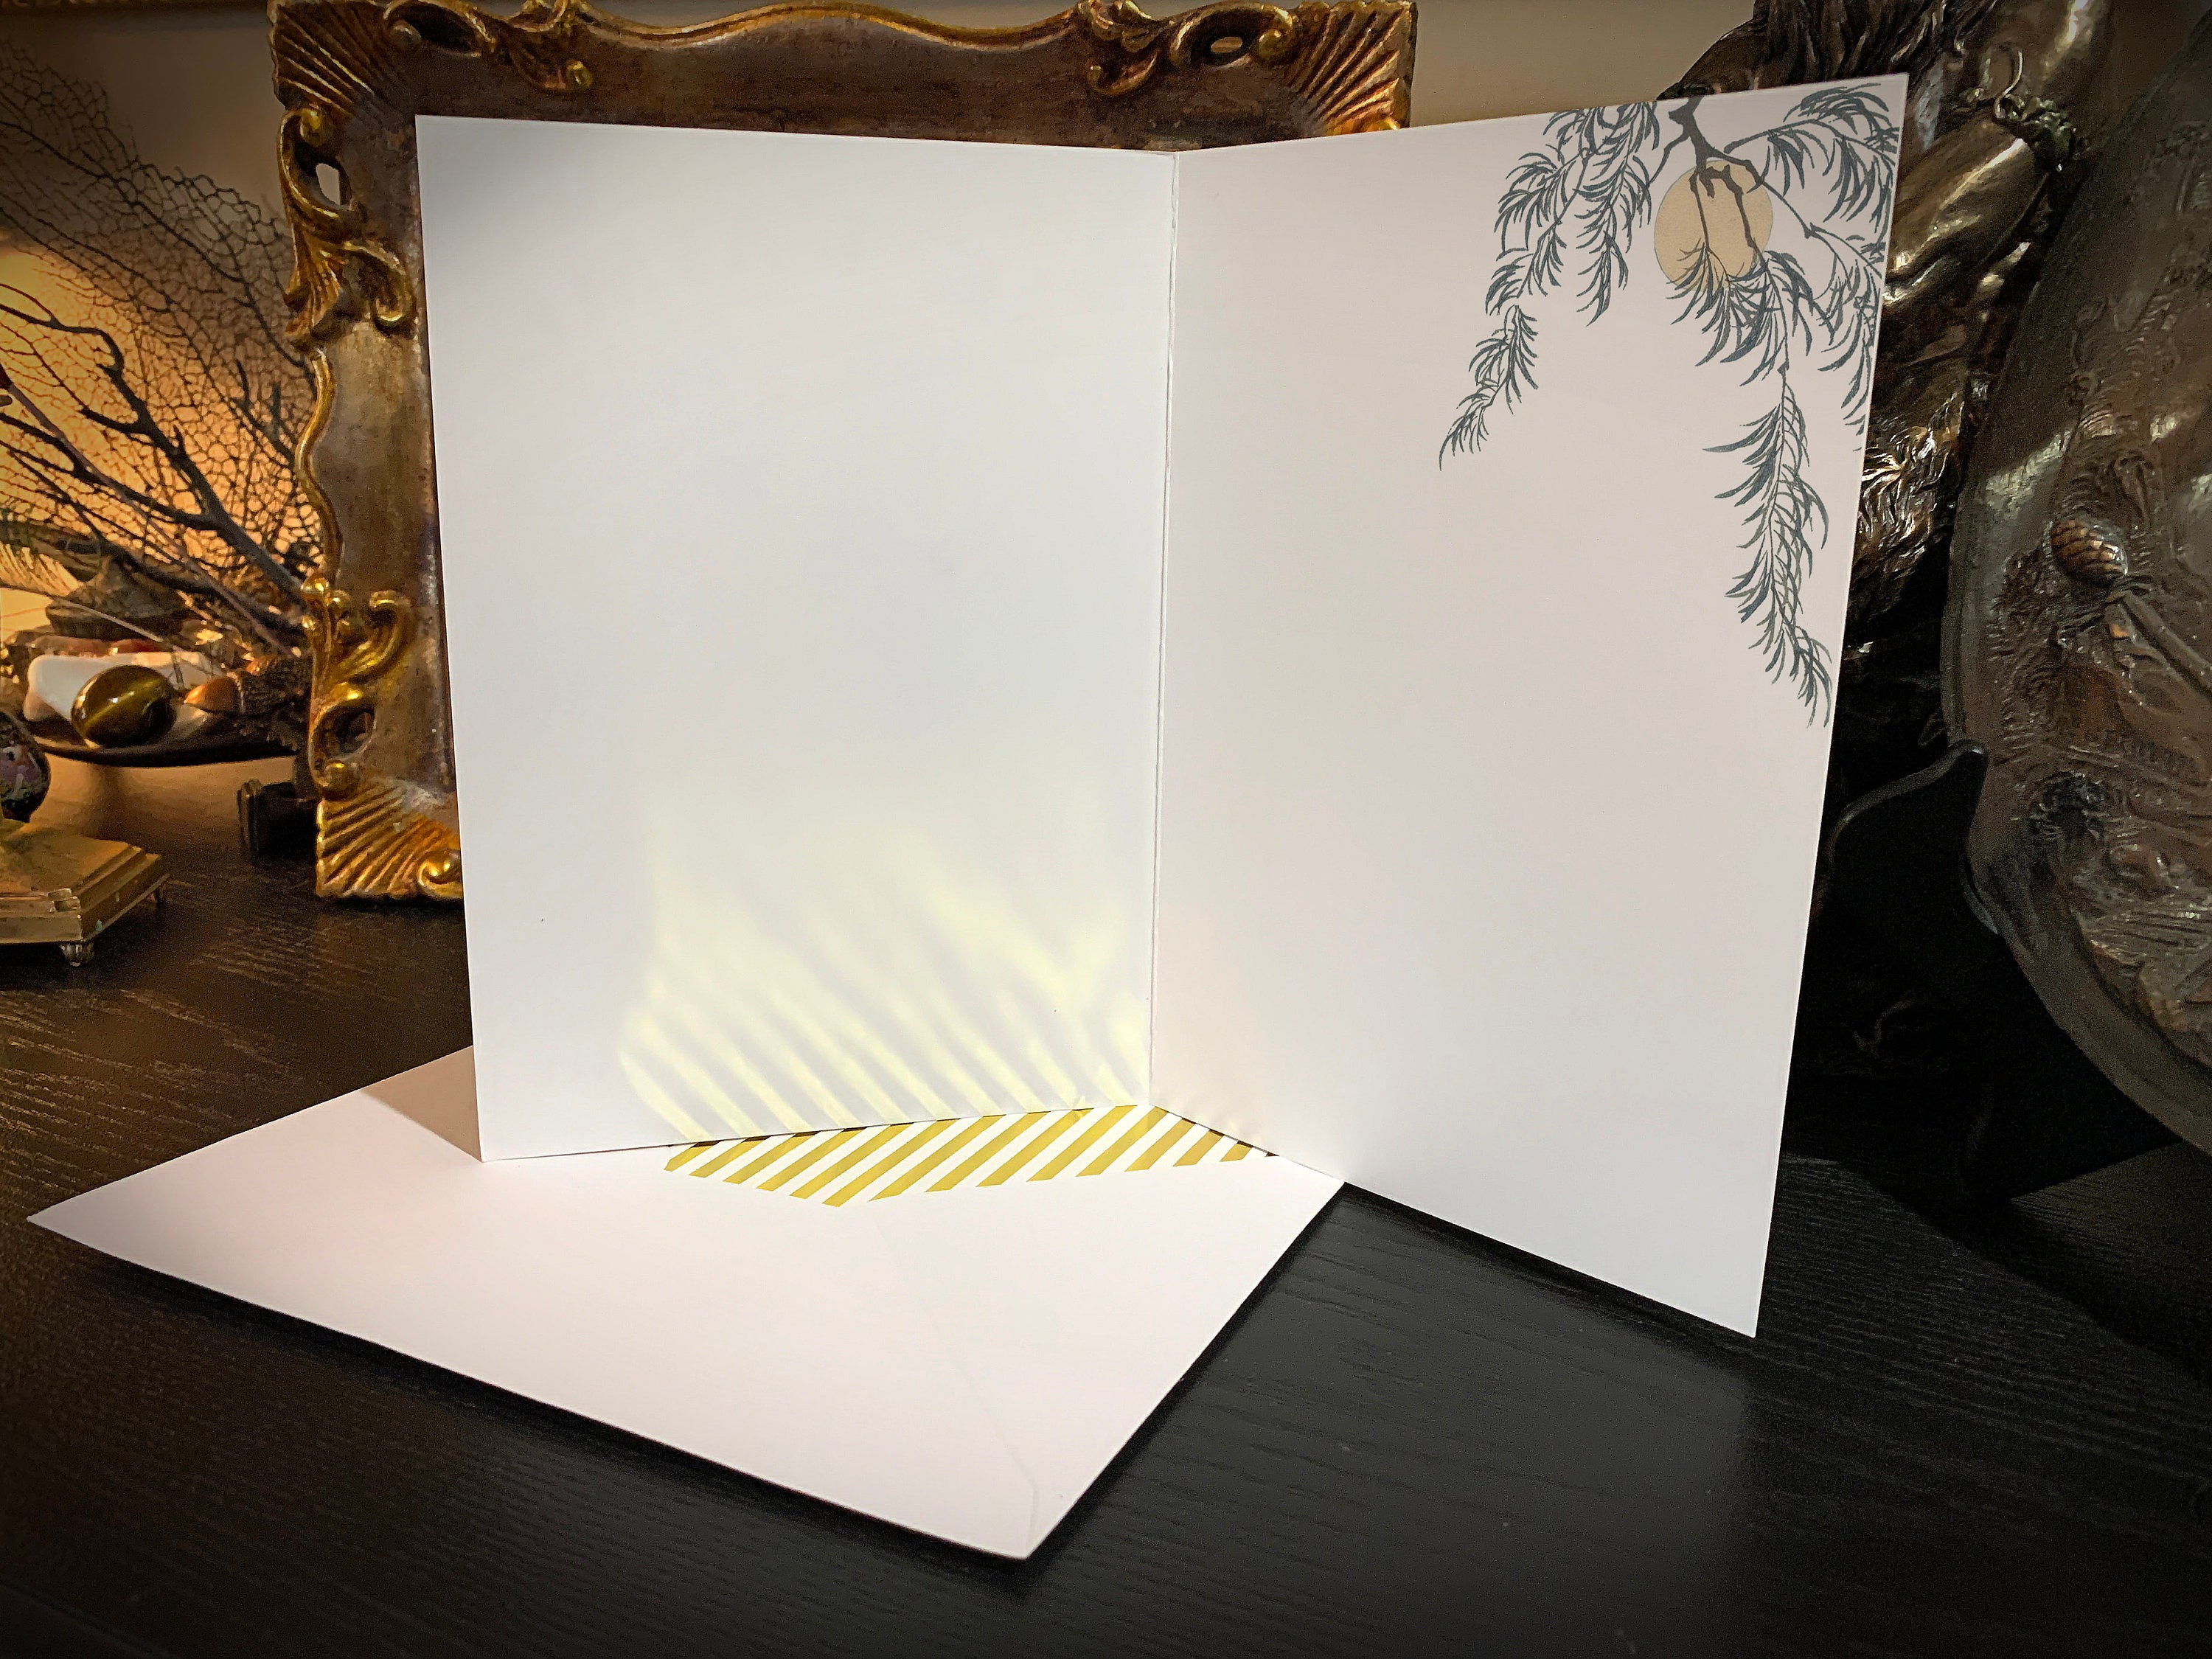 The Moon on Musashi Plain by Tsukioka Yoshitoshi Greeting Card with Gold Foil Envelope, 1 Card/Envelope